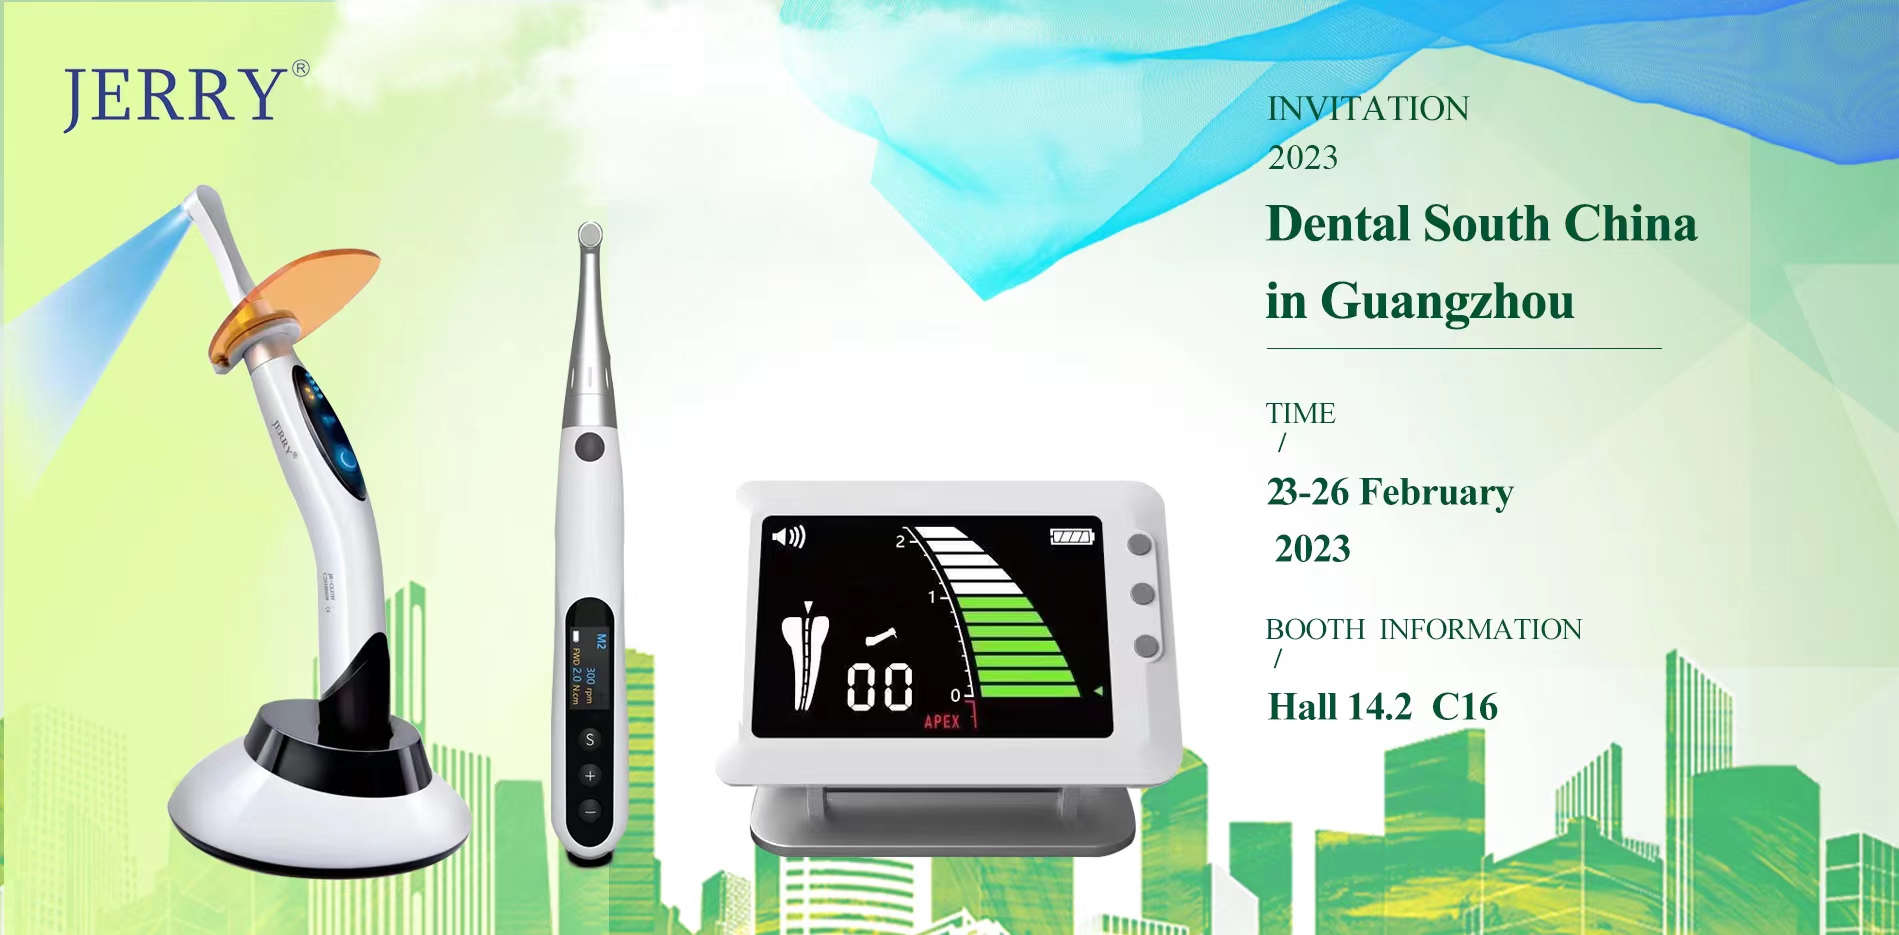 Dental South China 2023 waiting your coming!